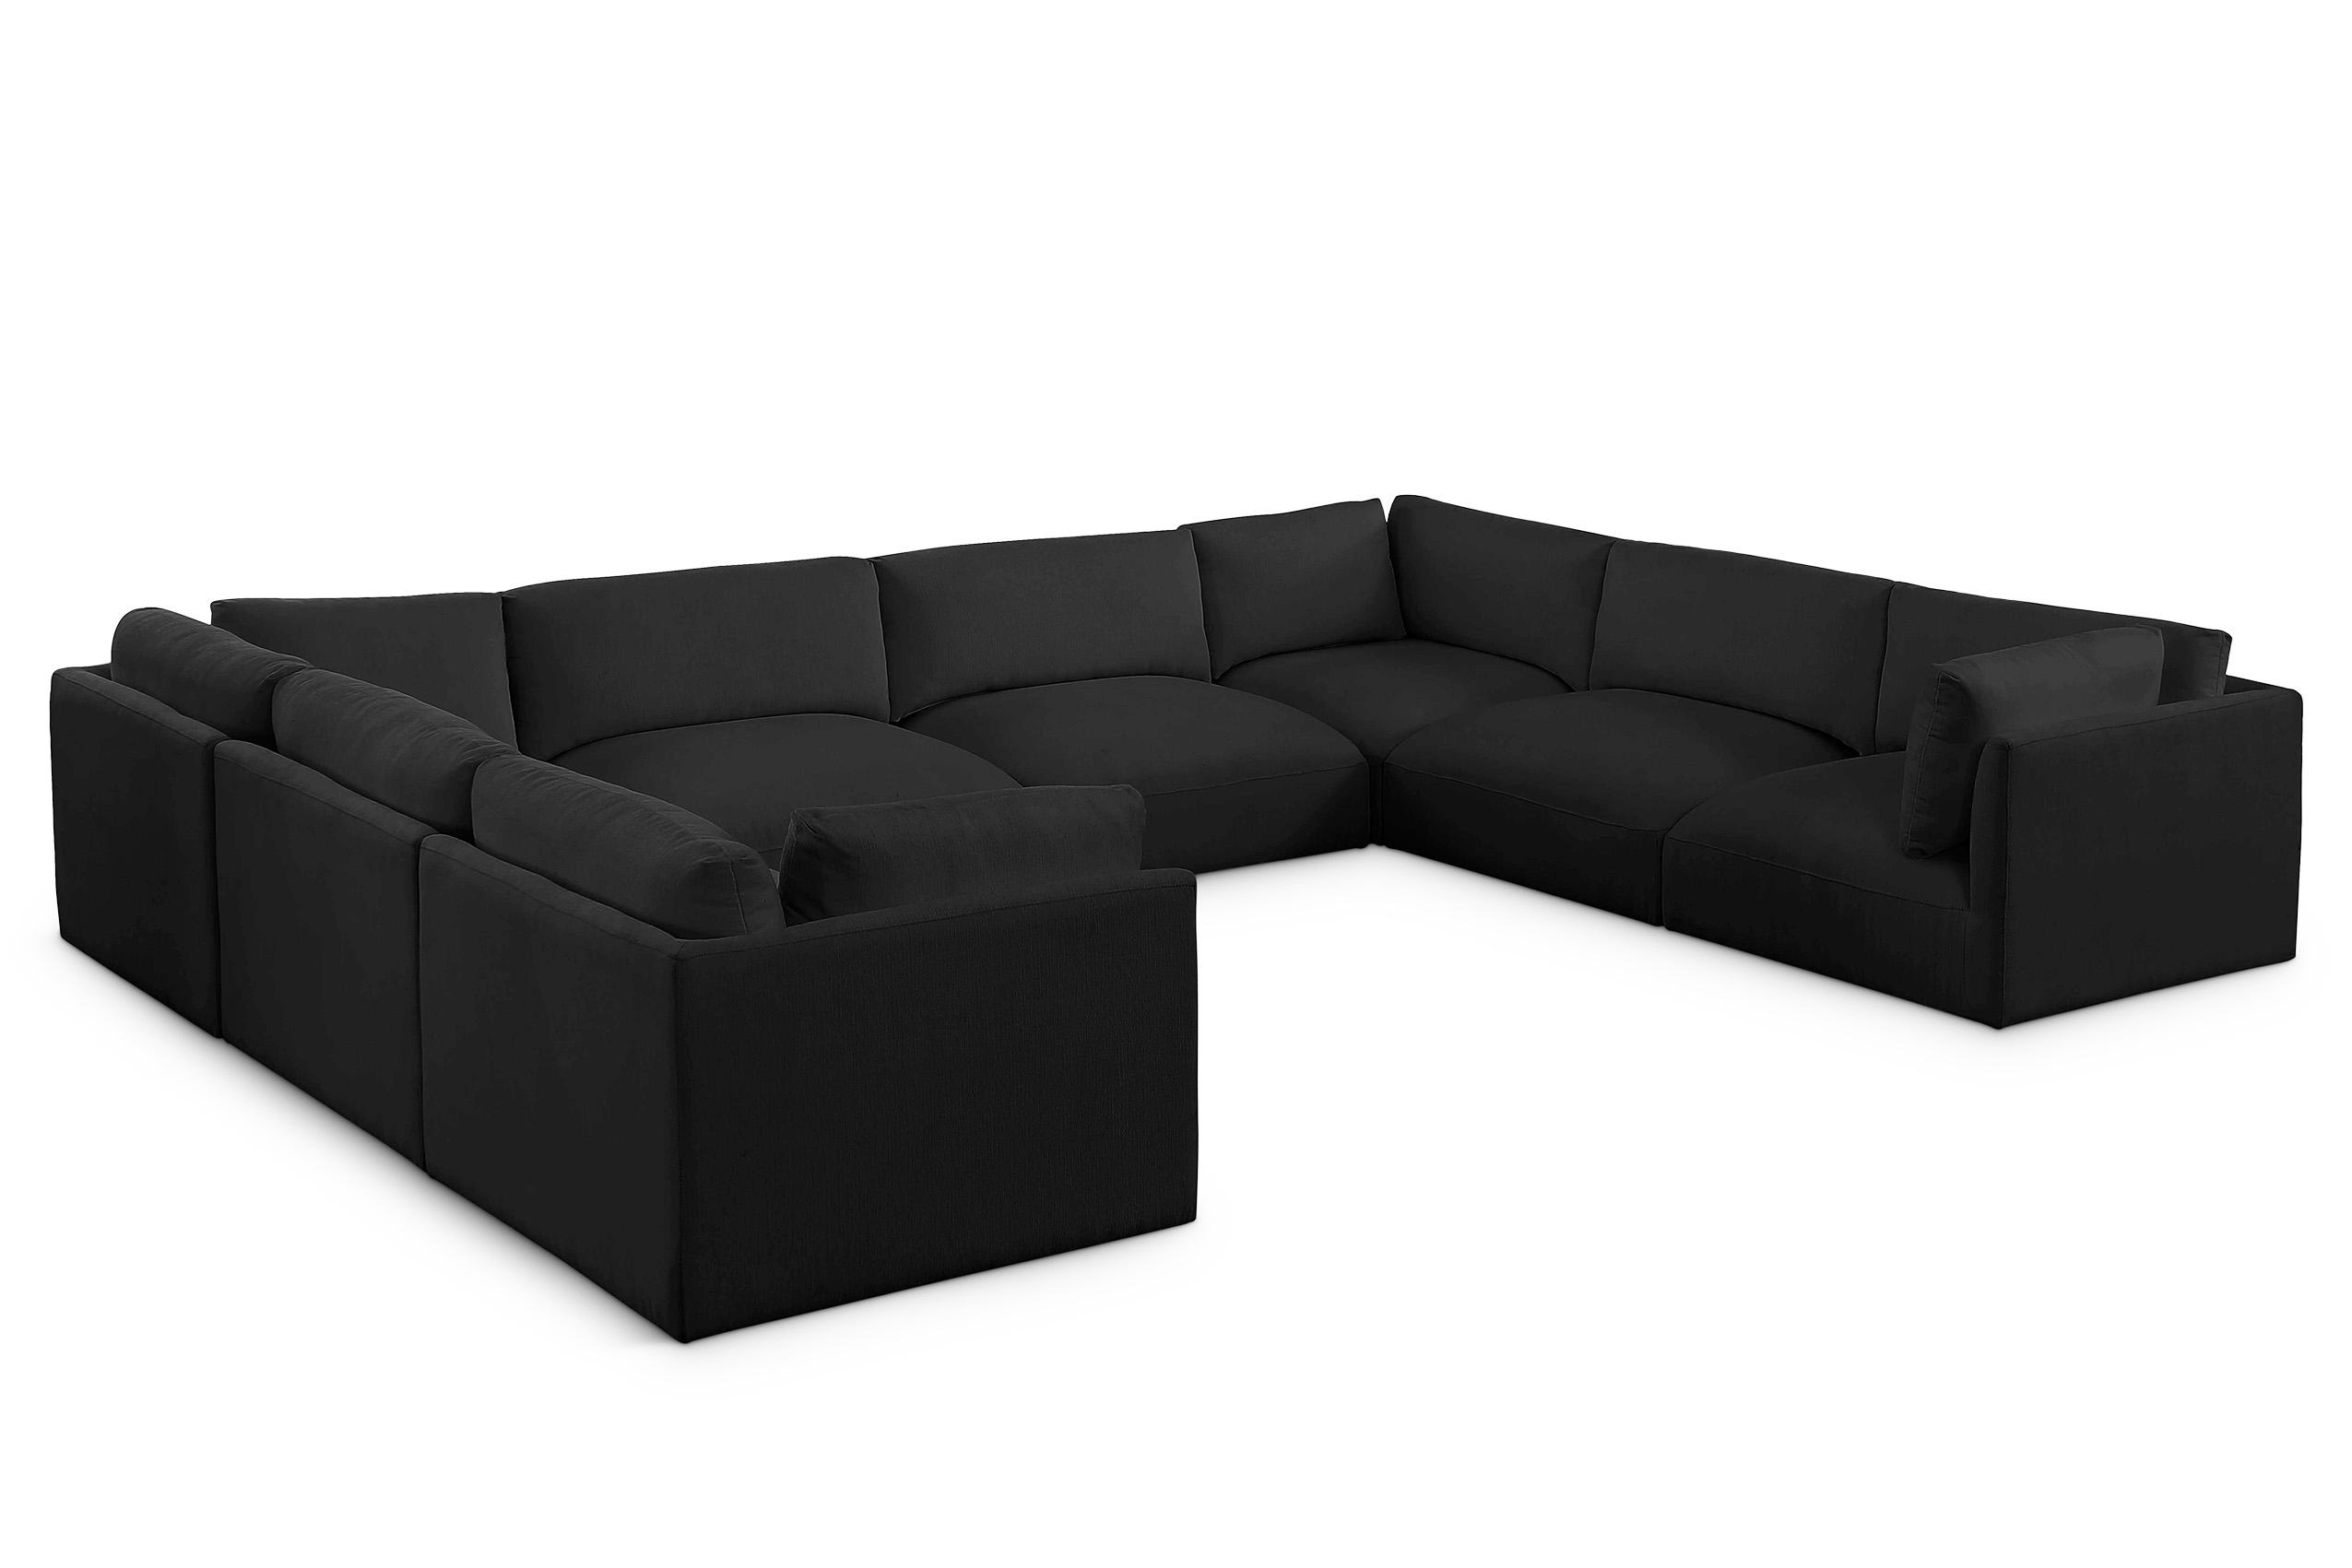 Contemporary, Modern Modular Sectional Sofa EASE 696Black-Sec8A 696Black-Sec8A in Black Fabric